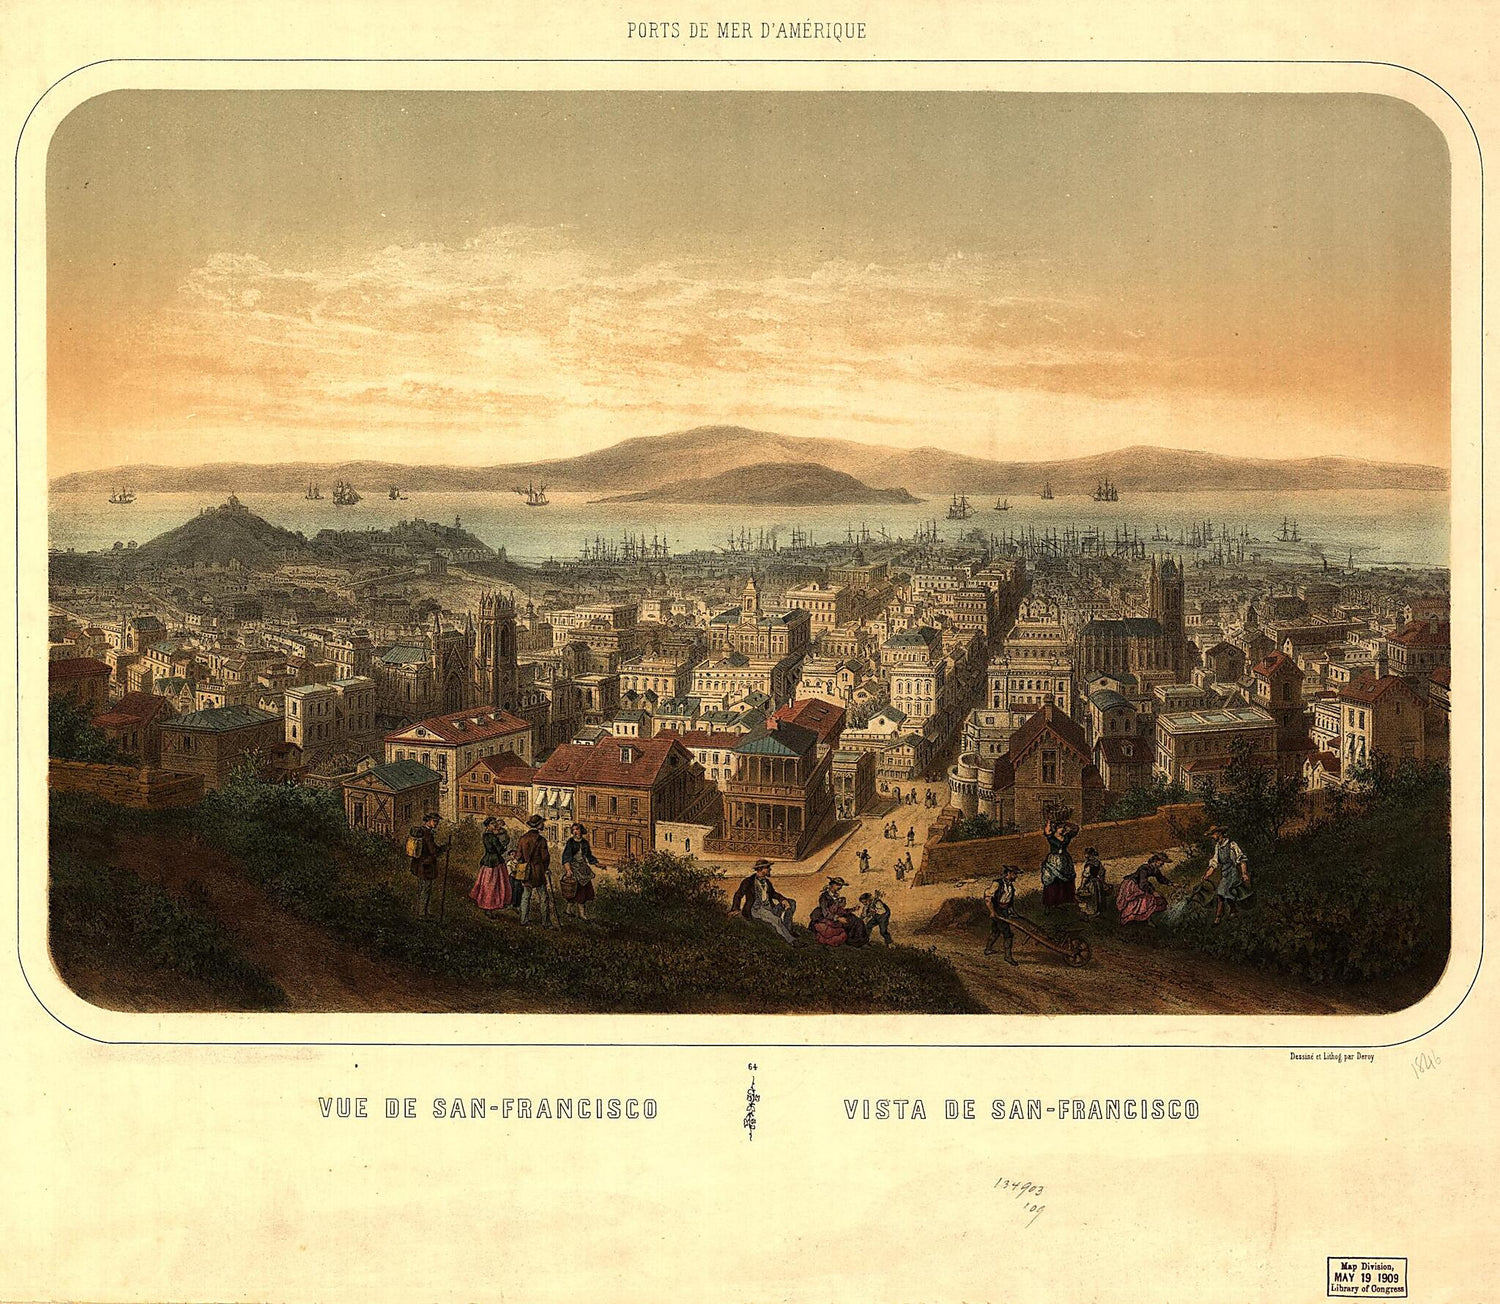 This old map of Francisco Vista De San-Francisco / Dessiné Et Lithog. Par Deroy from 1860 was created by Isador Laurent Deroy in 1860